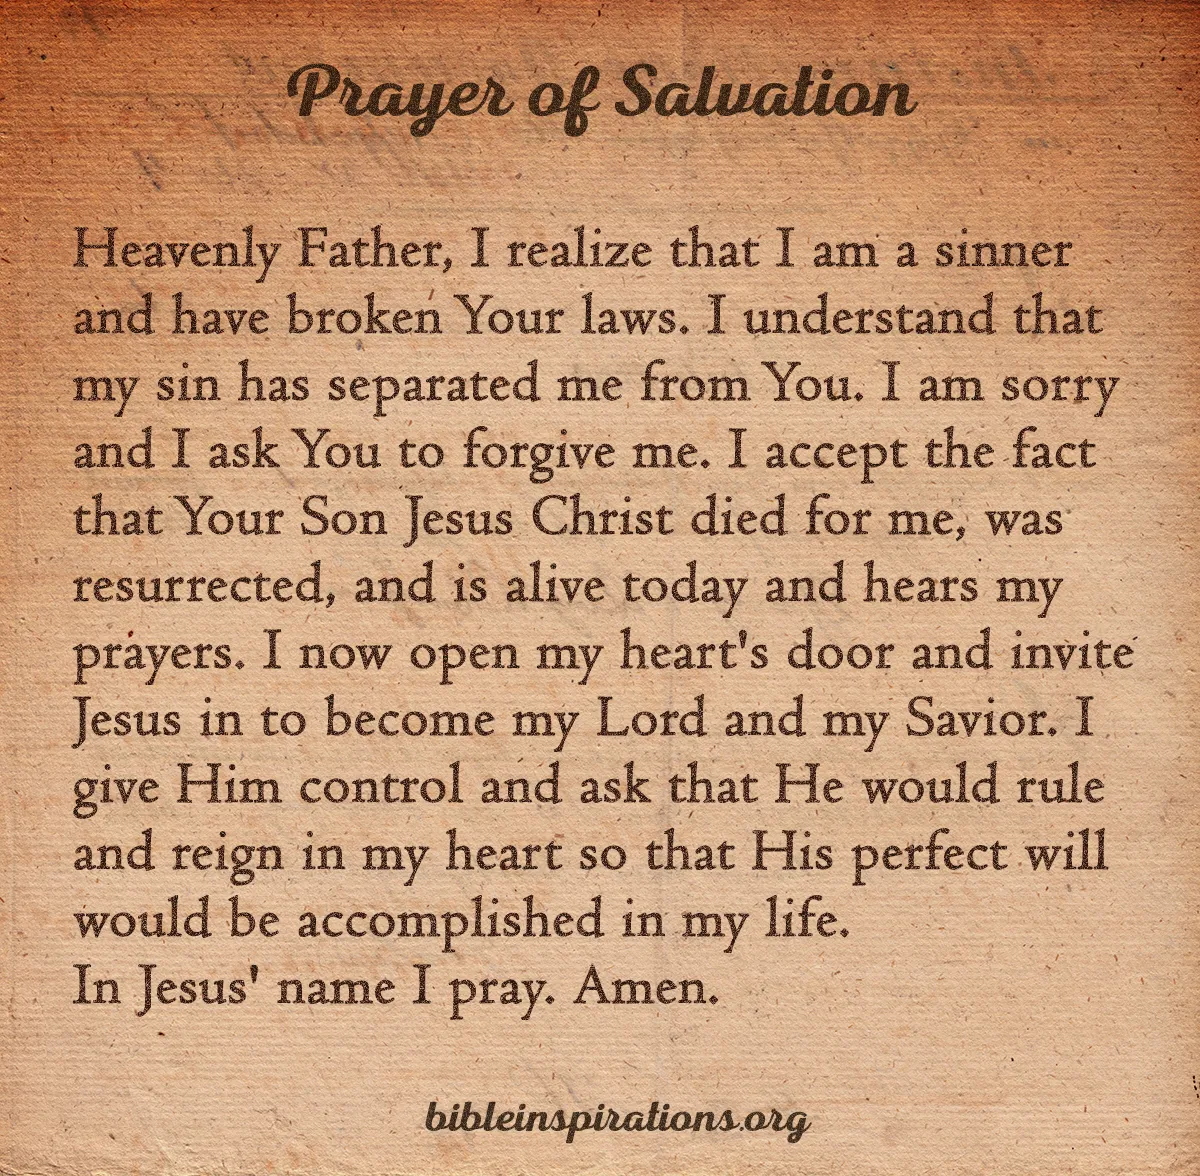 praying for salvation